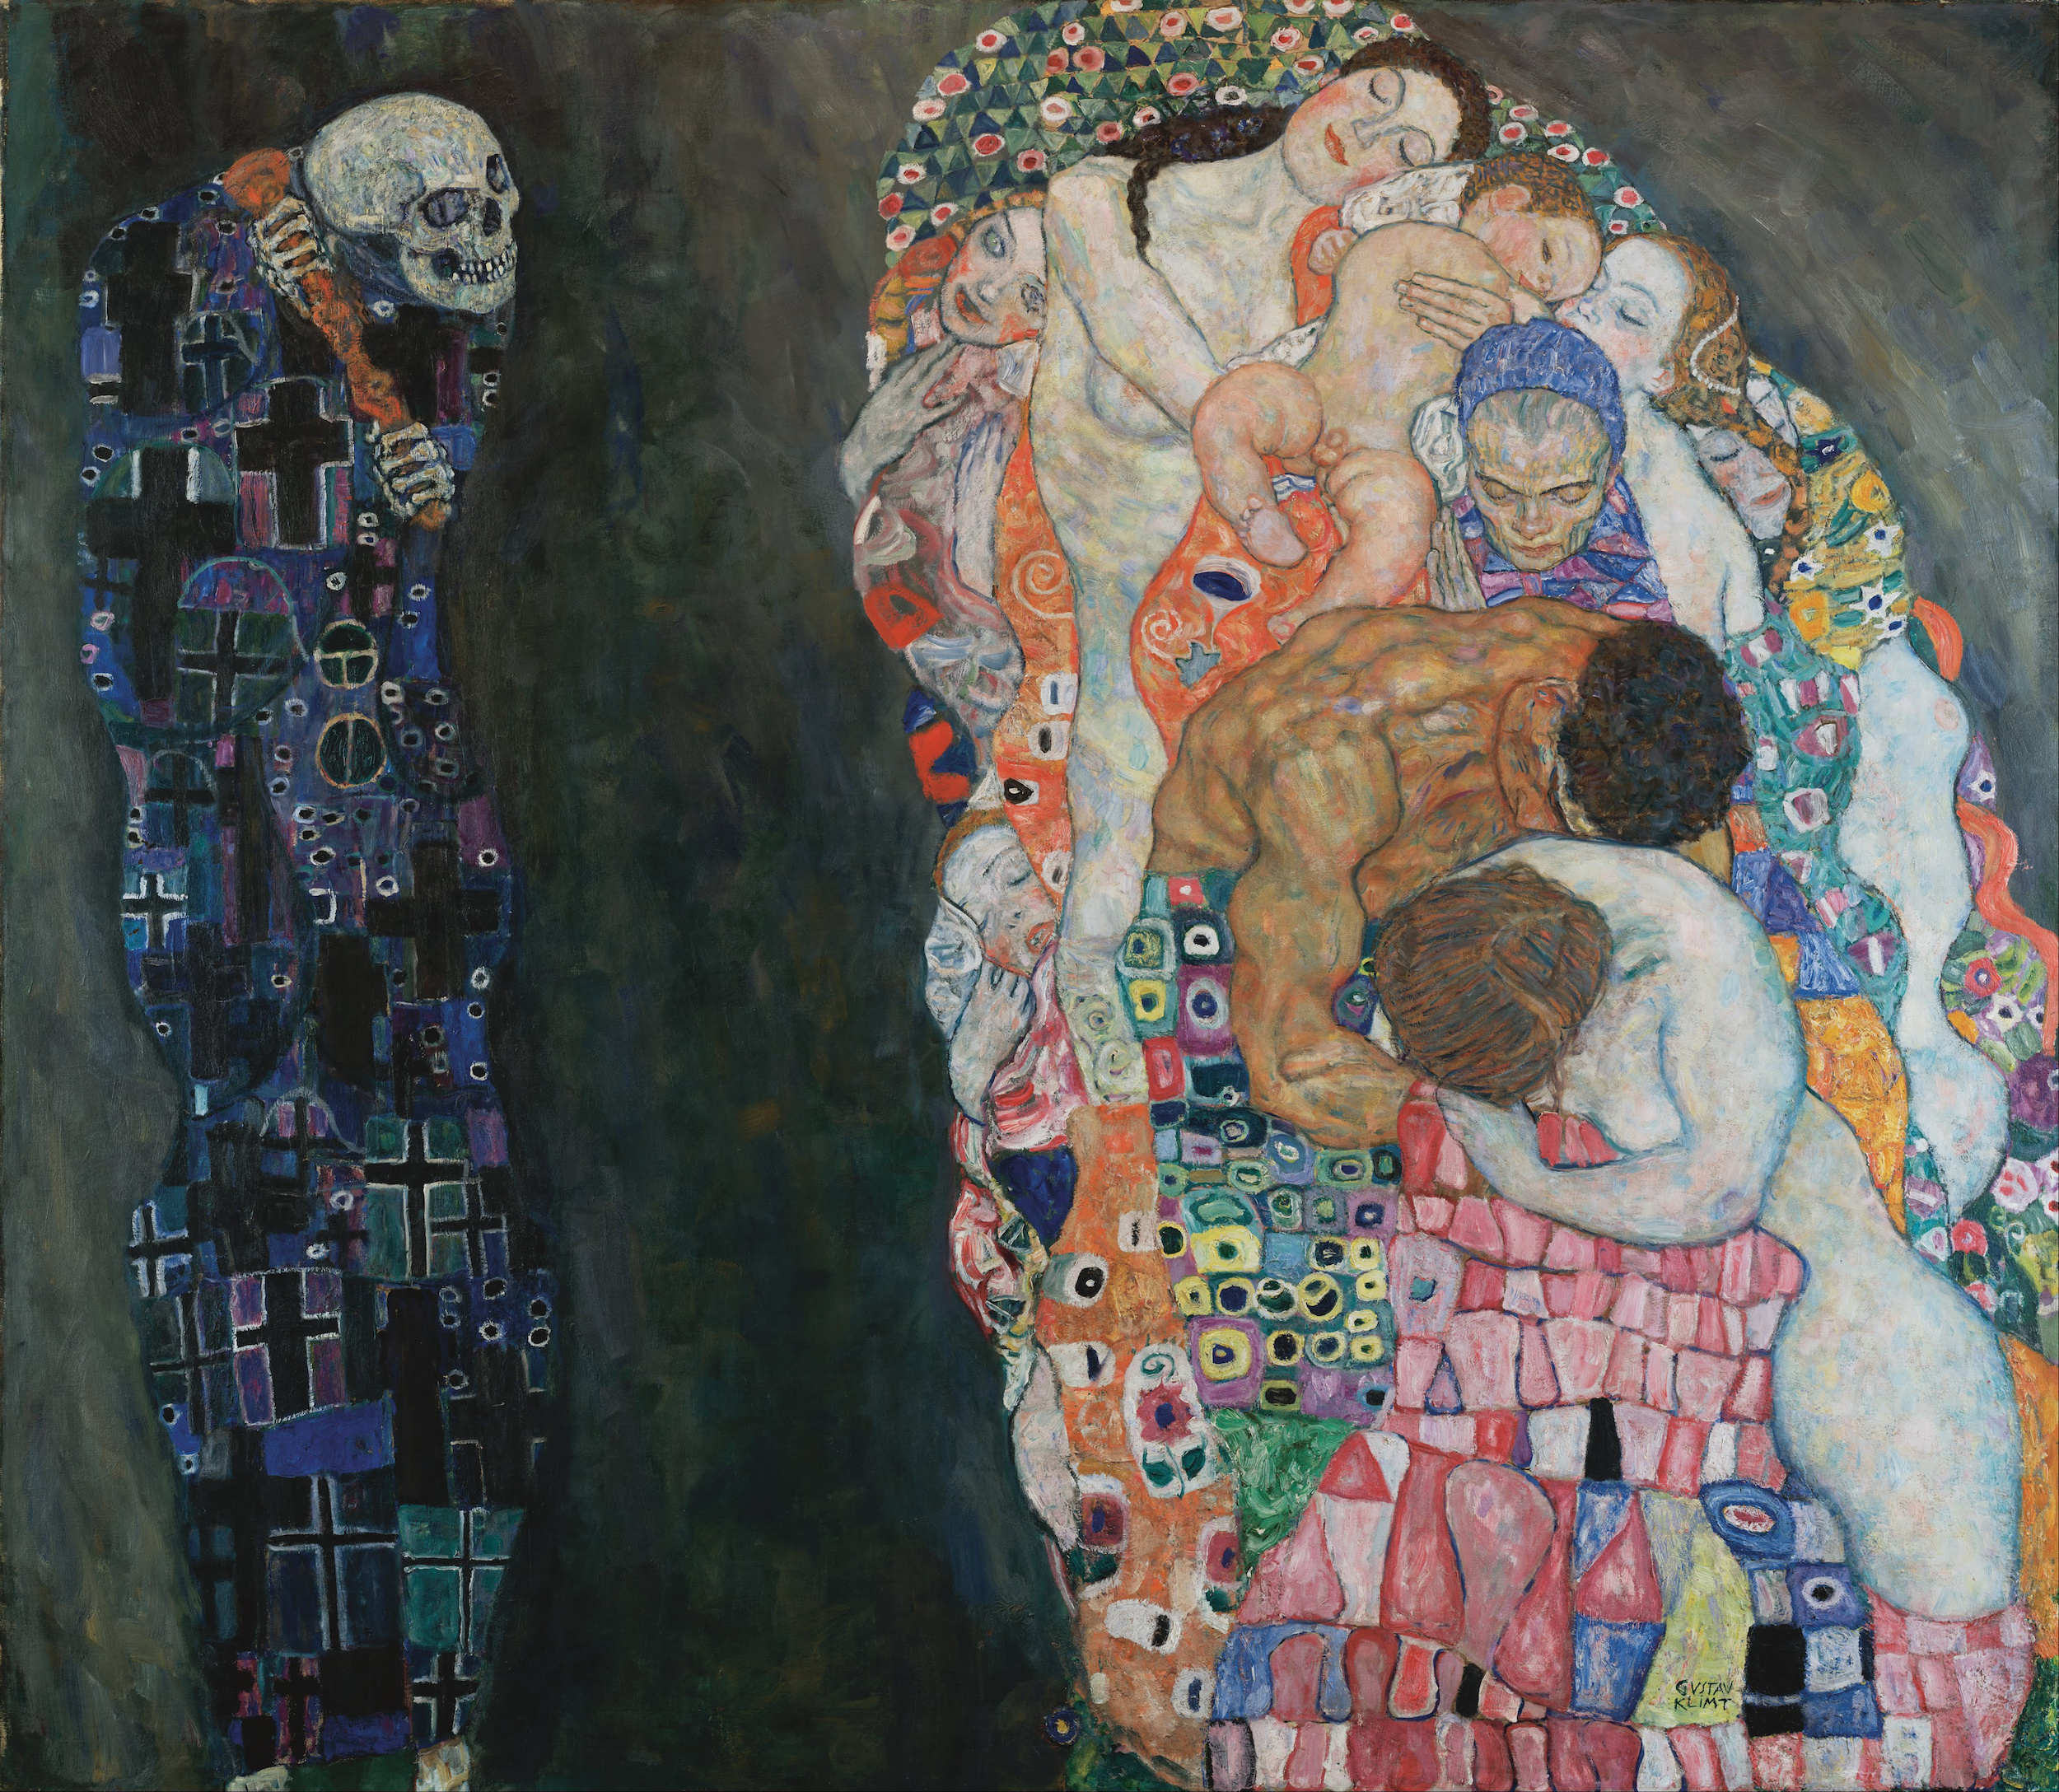 Muerte y vida by Gustav Klimt - 1908–1915 - 1.78 m x 1.98 m Museo Leopold